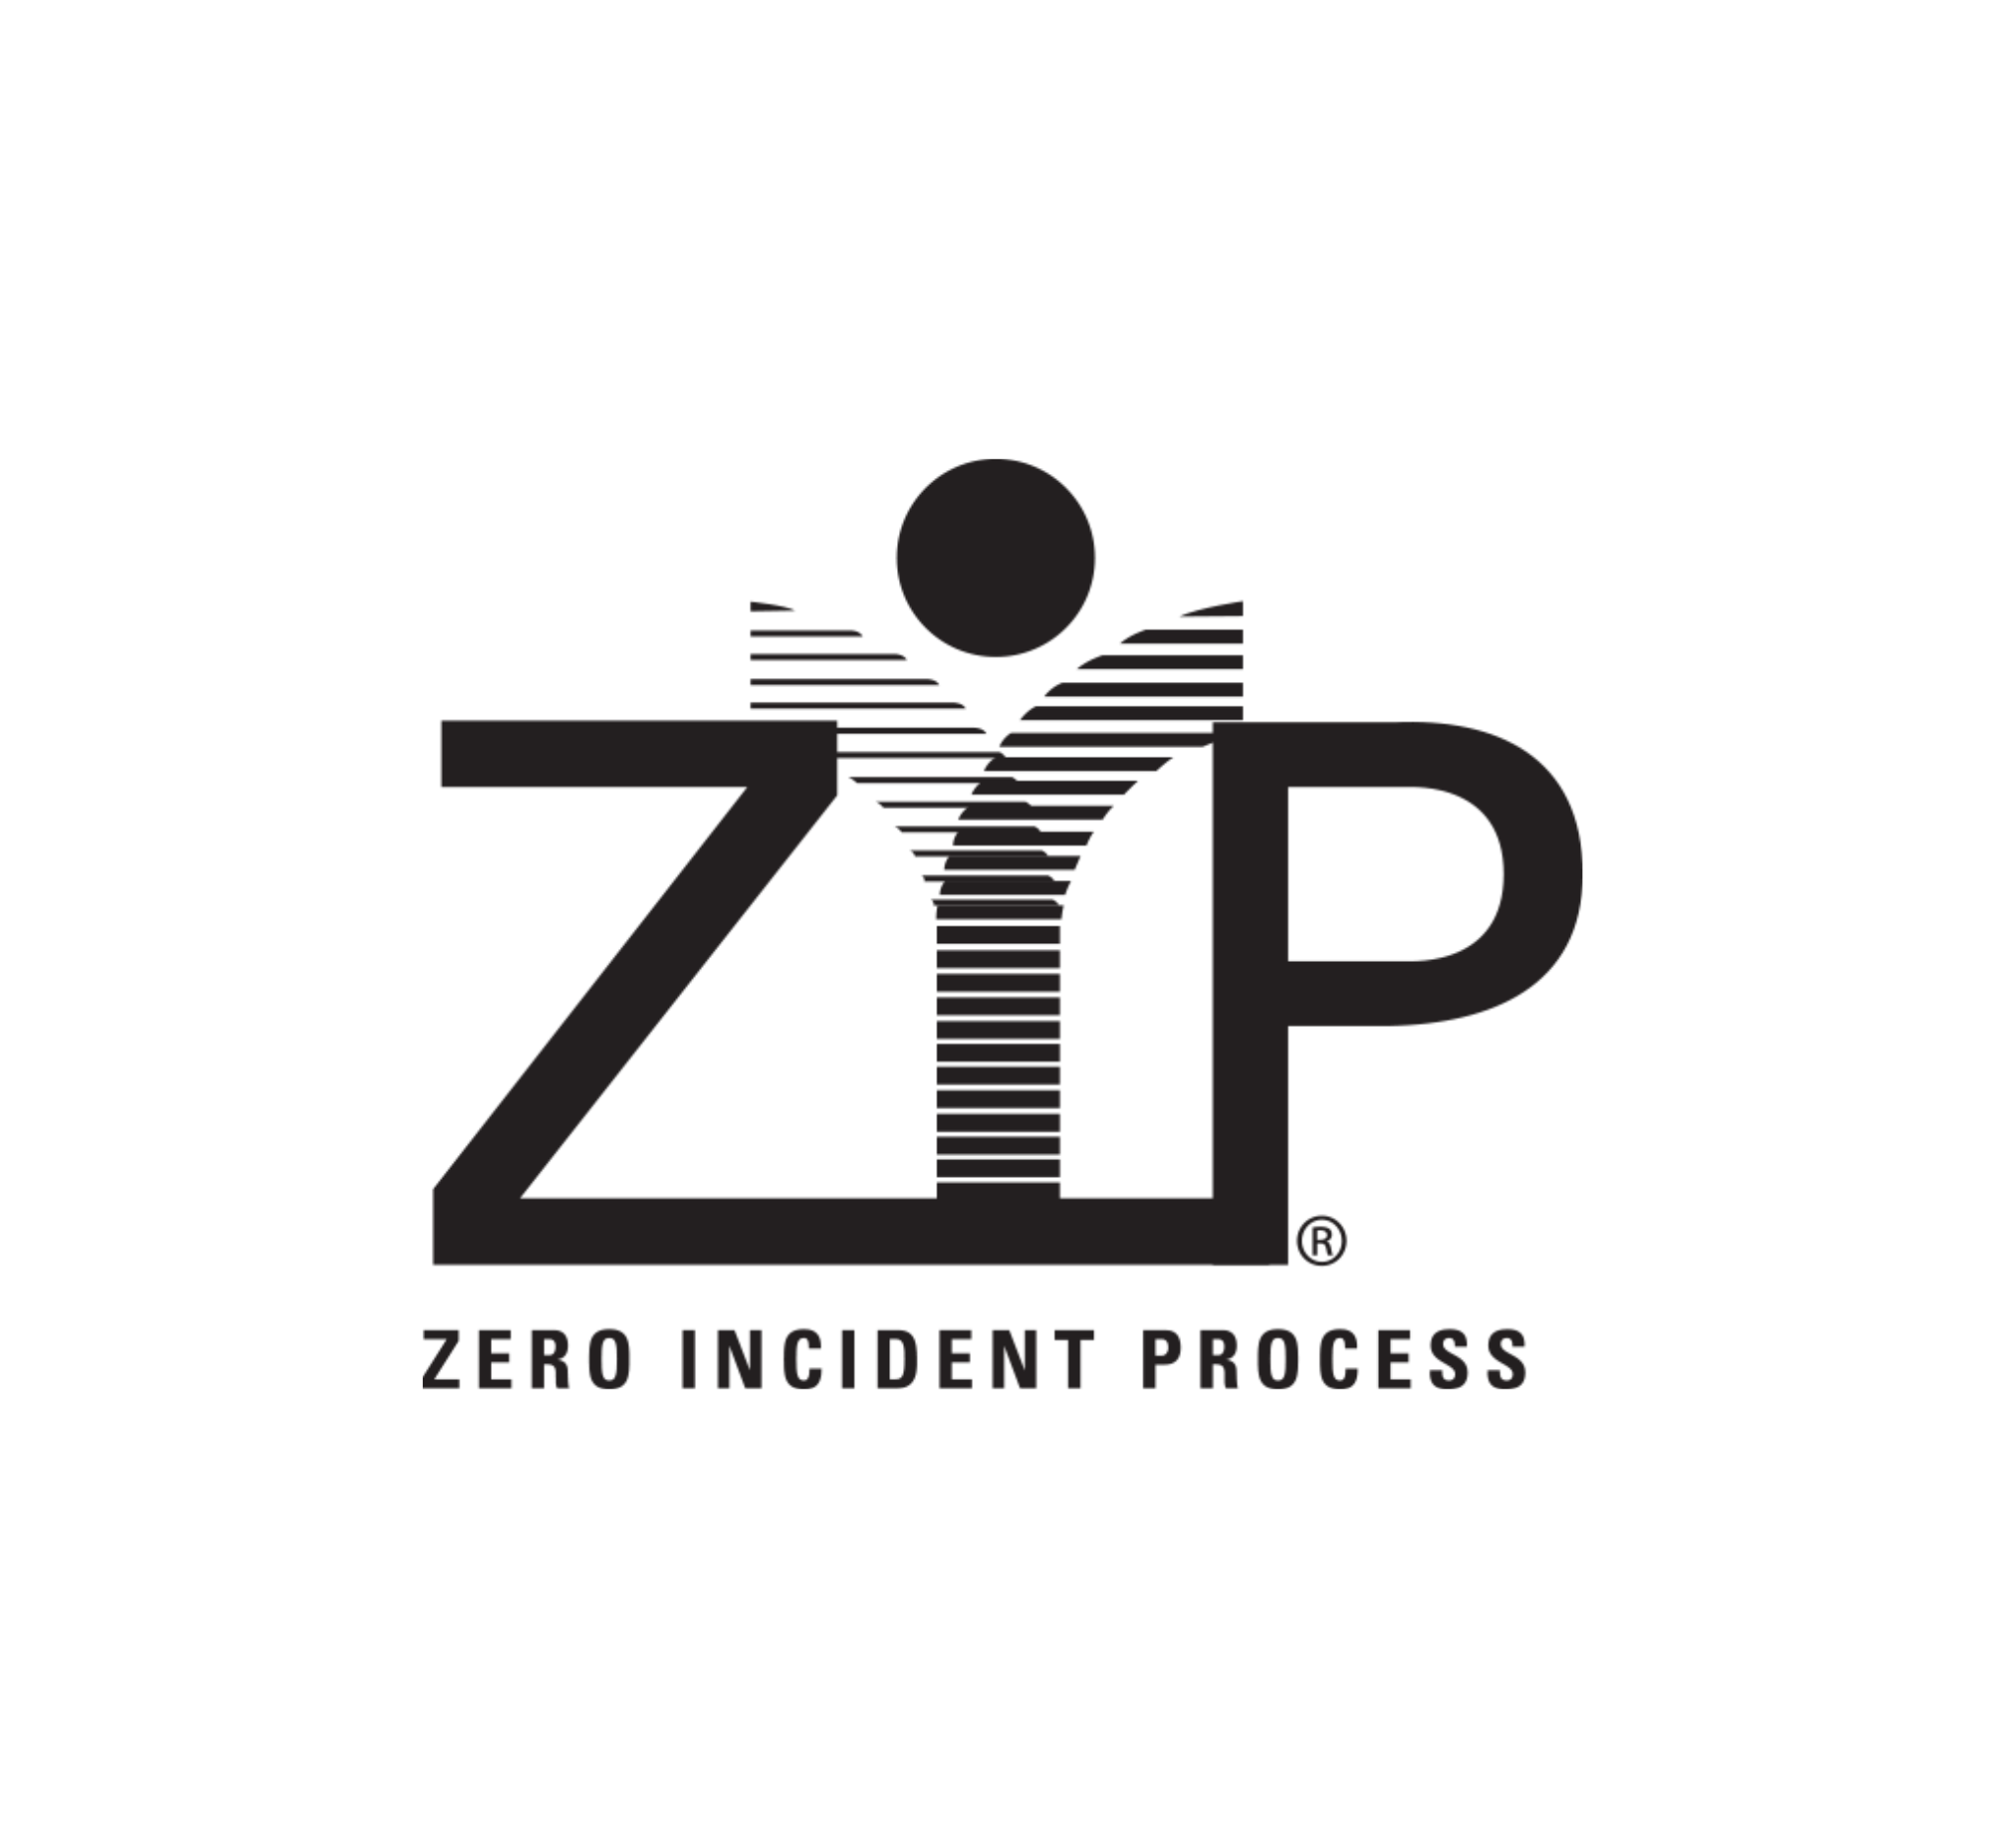 Sentis ZIP Zero Incident Process Logo